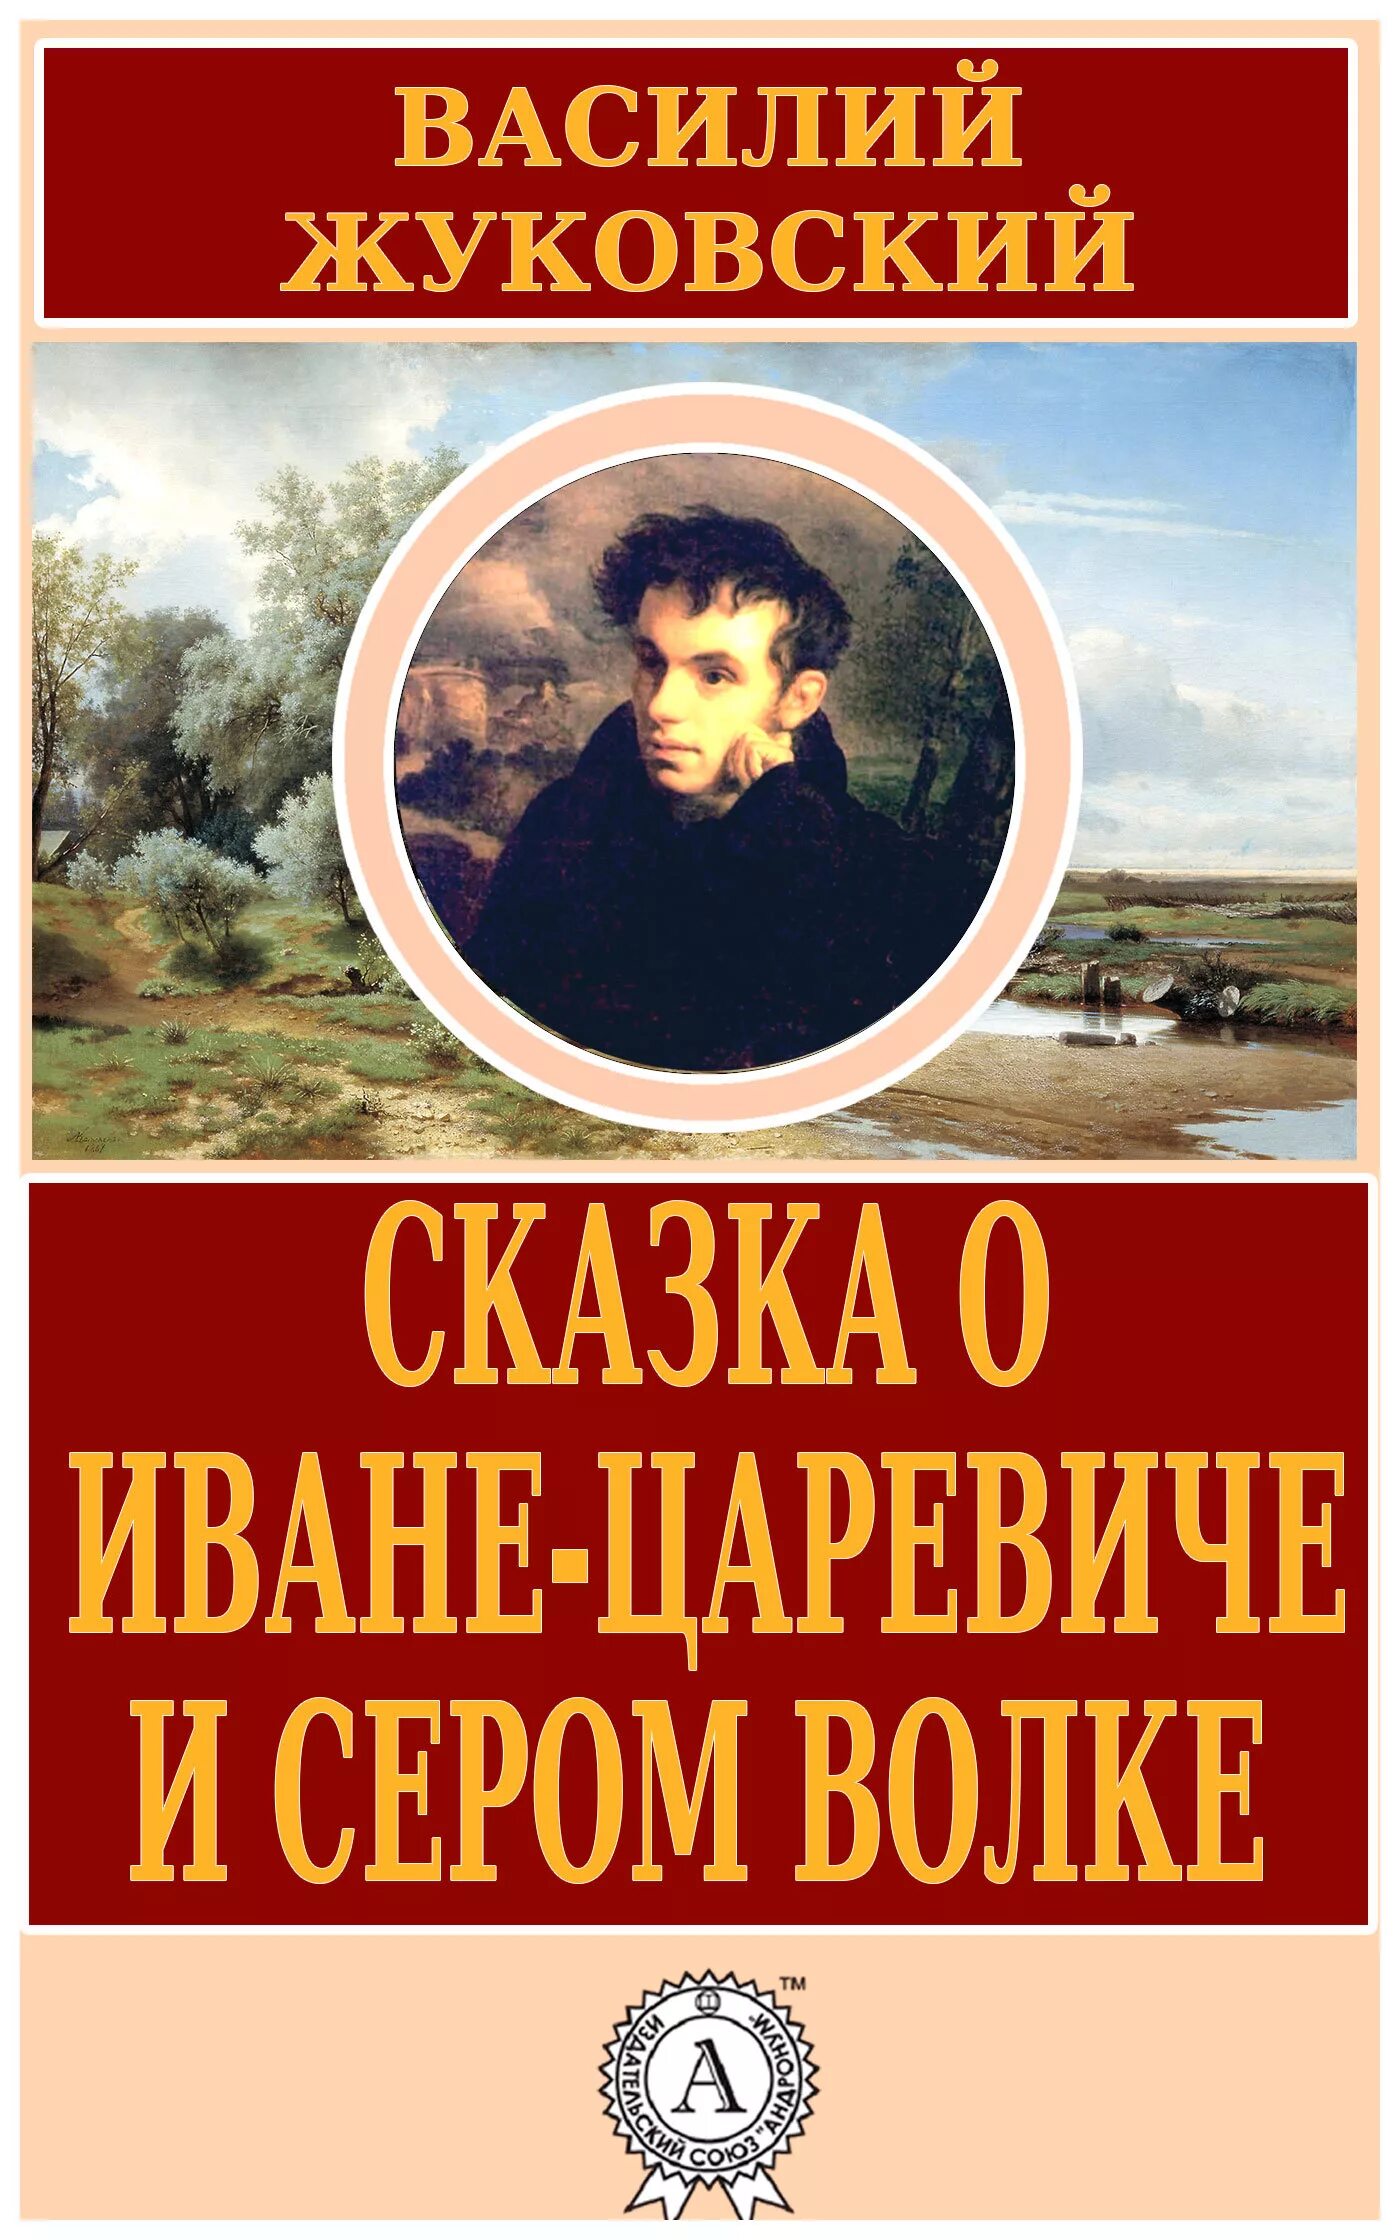 Книги Жуковского Василия Андреевича.